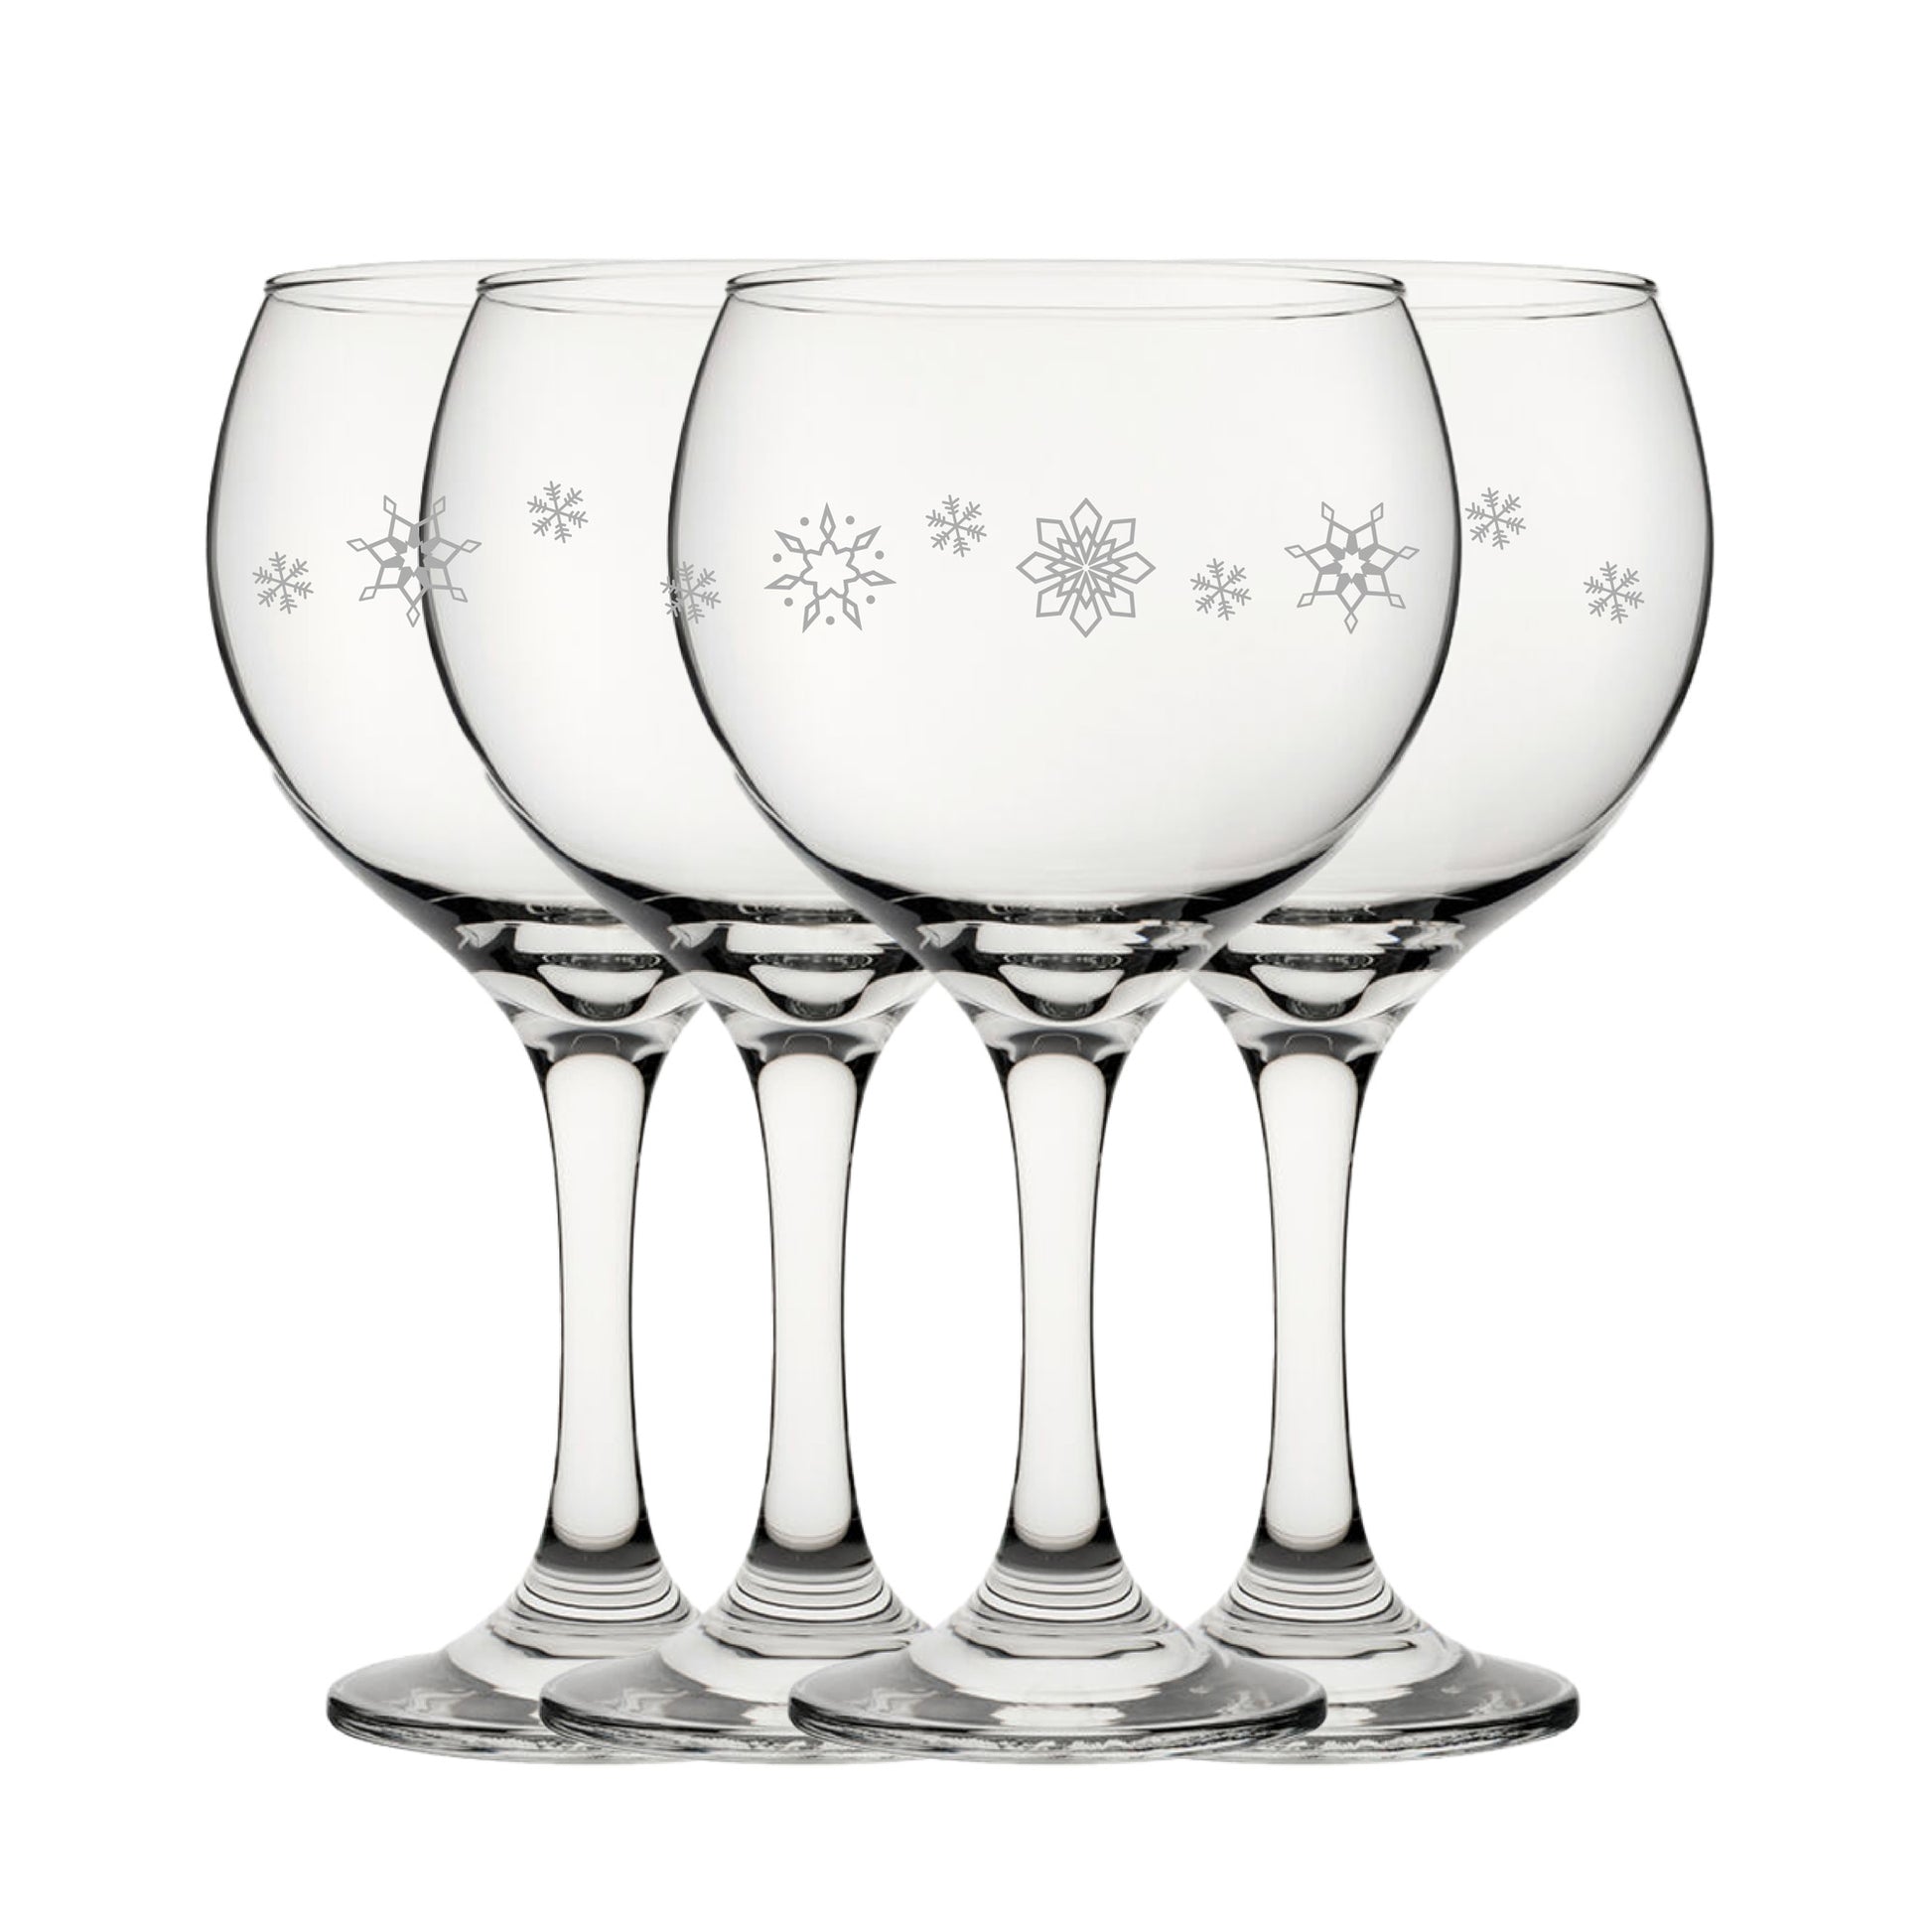 Engraved Snowflake Pattern Gin Balloon Set of 4 22.5oz Glasses Image 1